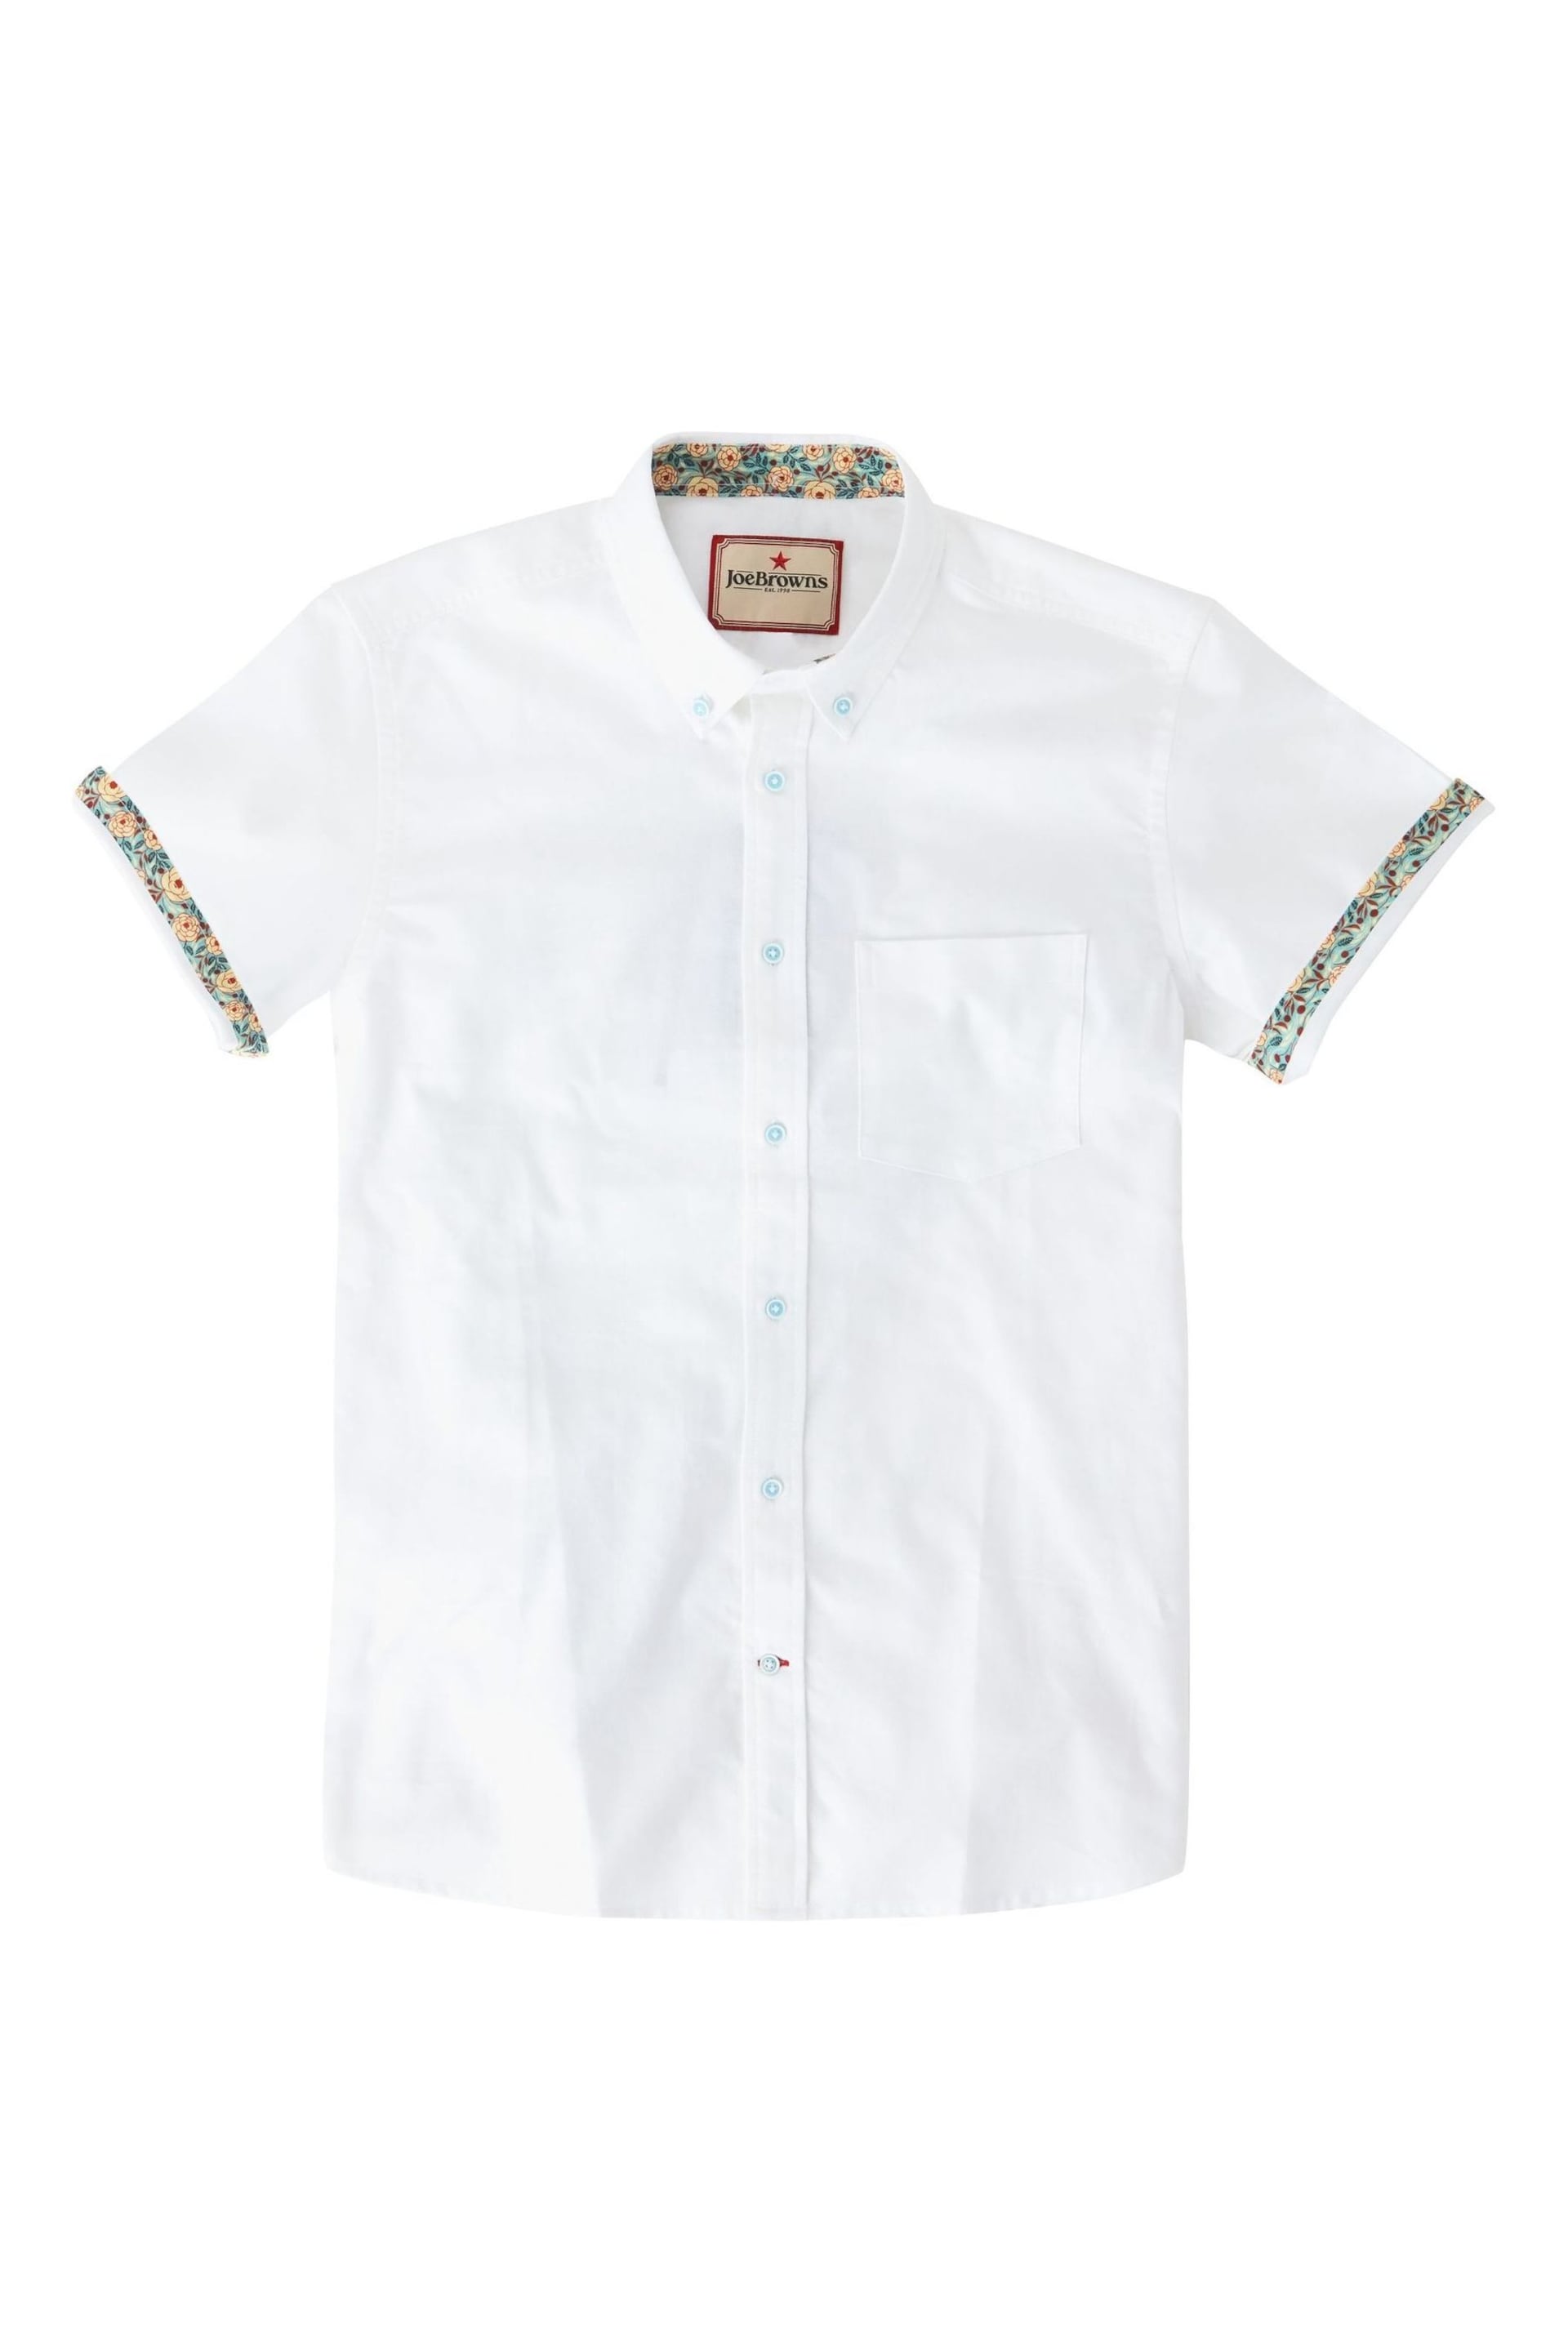 Joe Browns White Classic Oxford Collar Shirt - Image 5 of 5